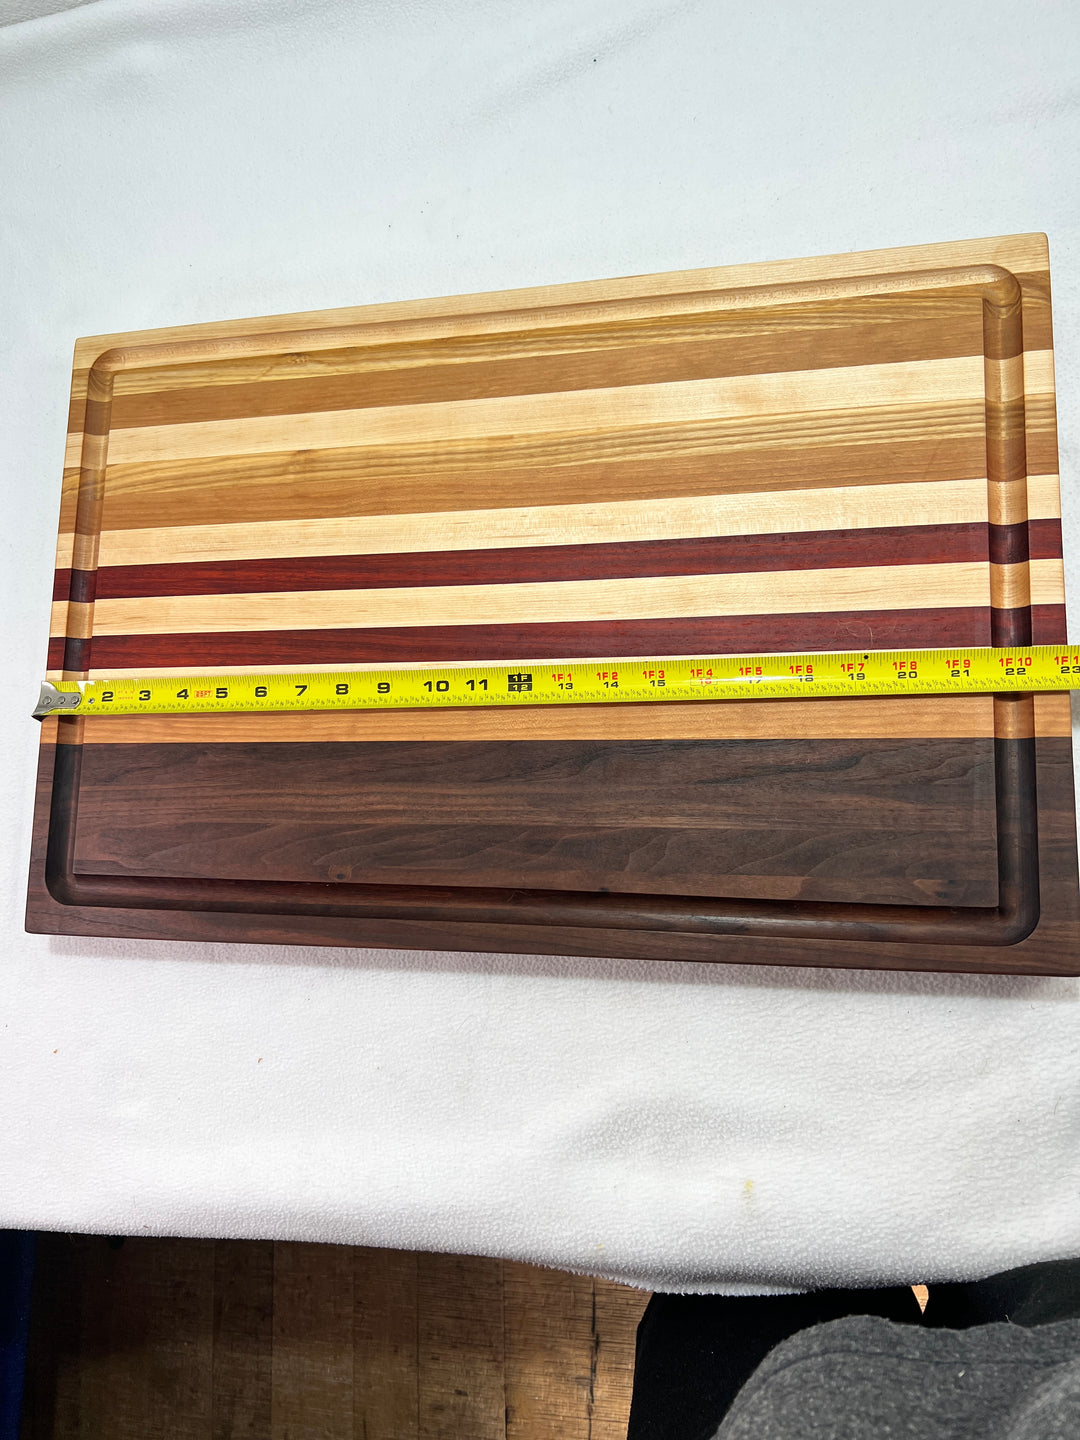 Cutting Board Stripe Multi Exotic Wood with Juice Groove Butcher Block Edge Grain Large 0117232